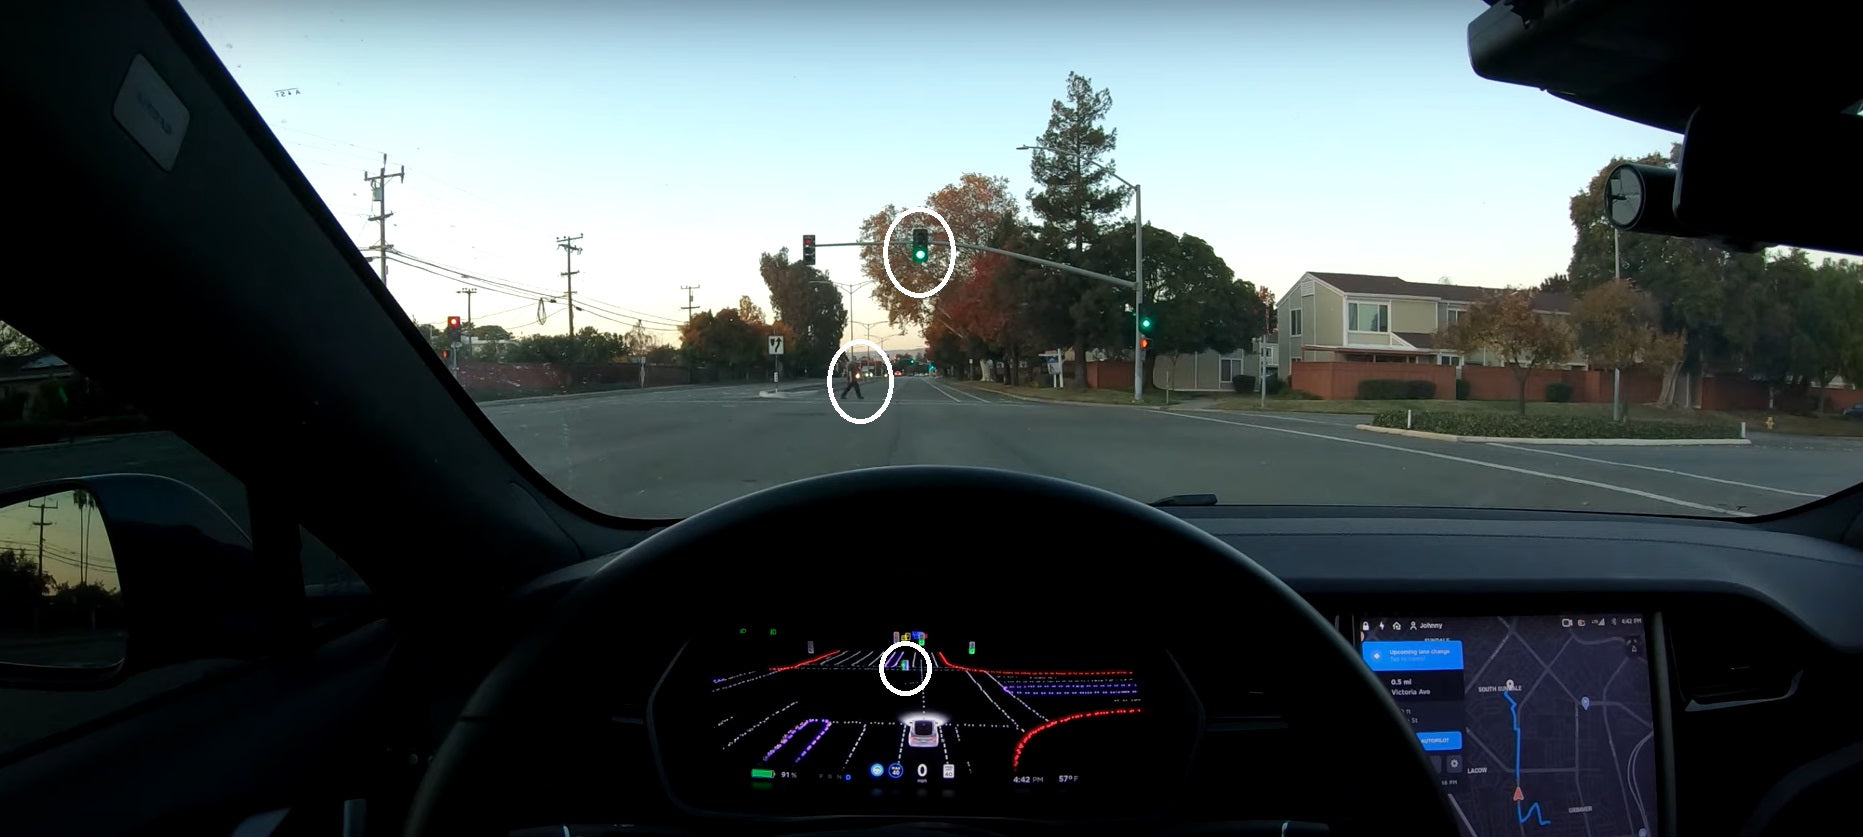 Tesla Full Self-Driving FSD Beta 5 2020.44.15.3 Update Makes Autonomous Driving More Human-Like